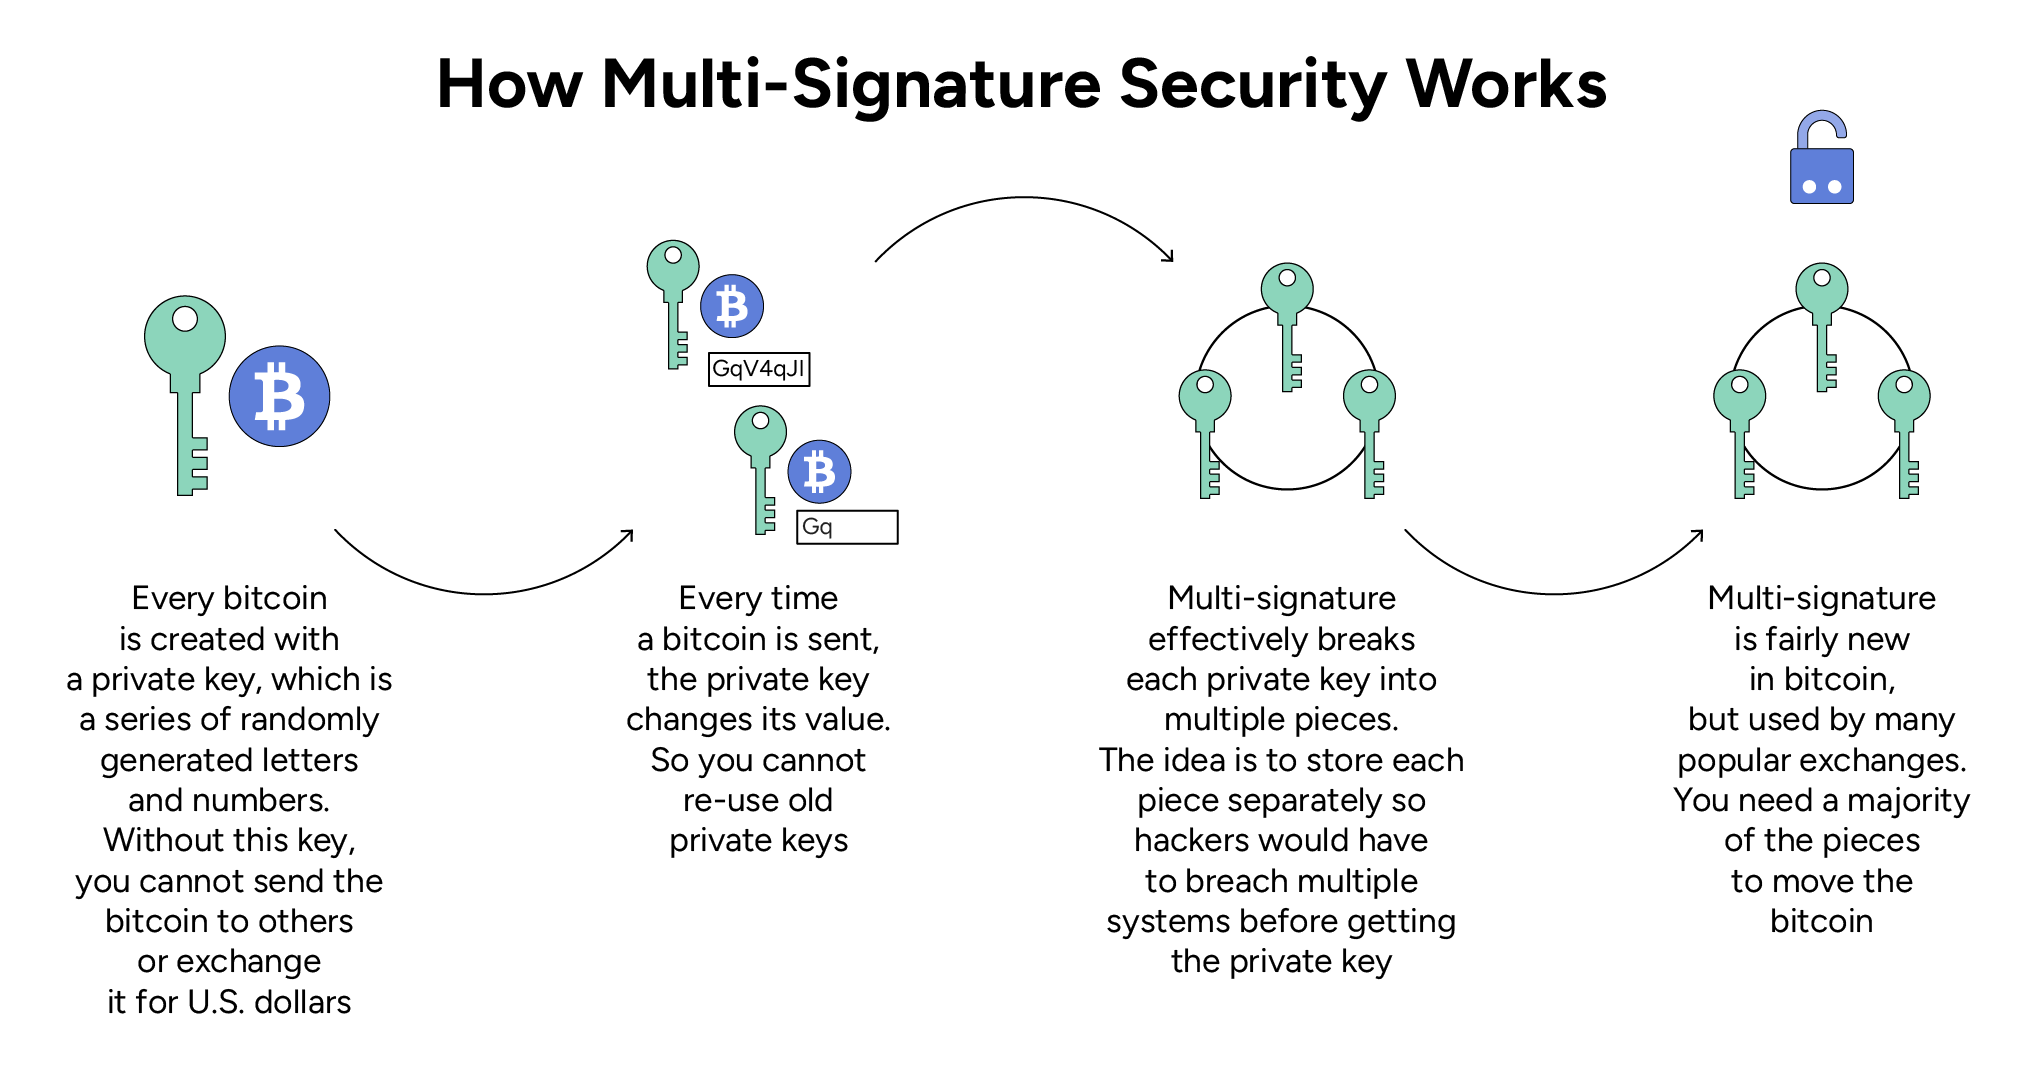 How multi-signature security works